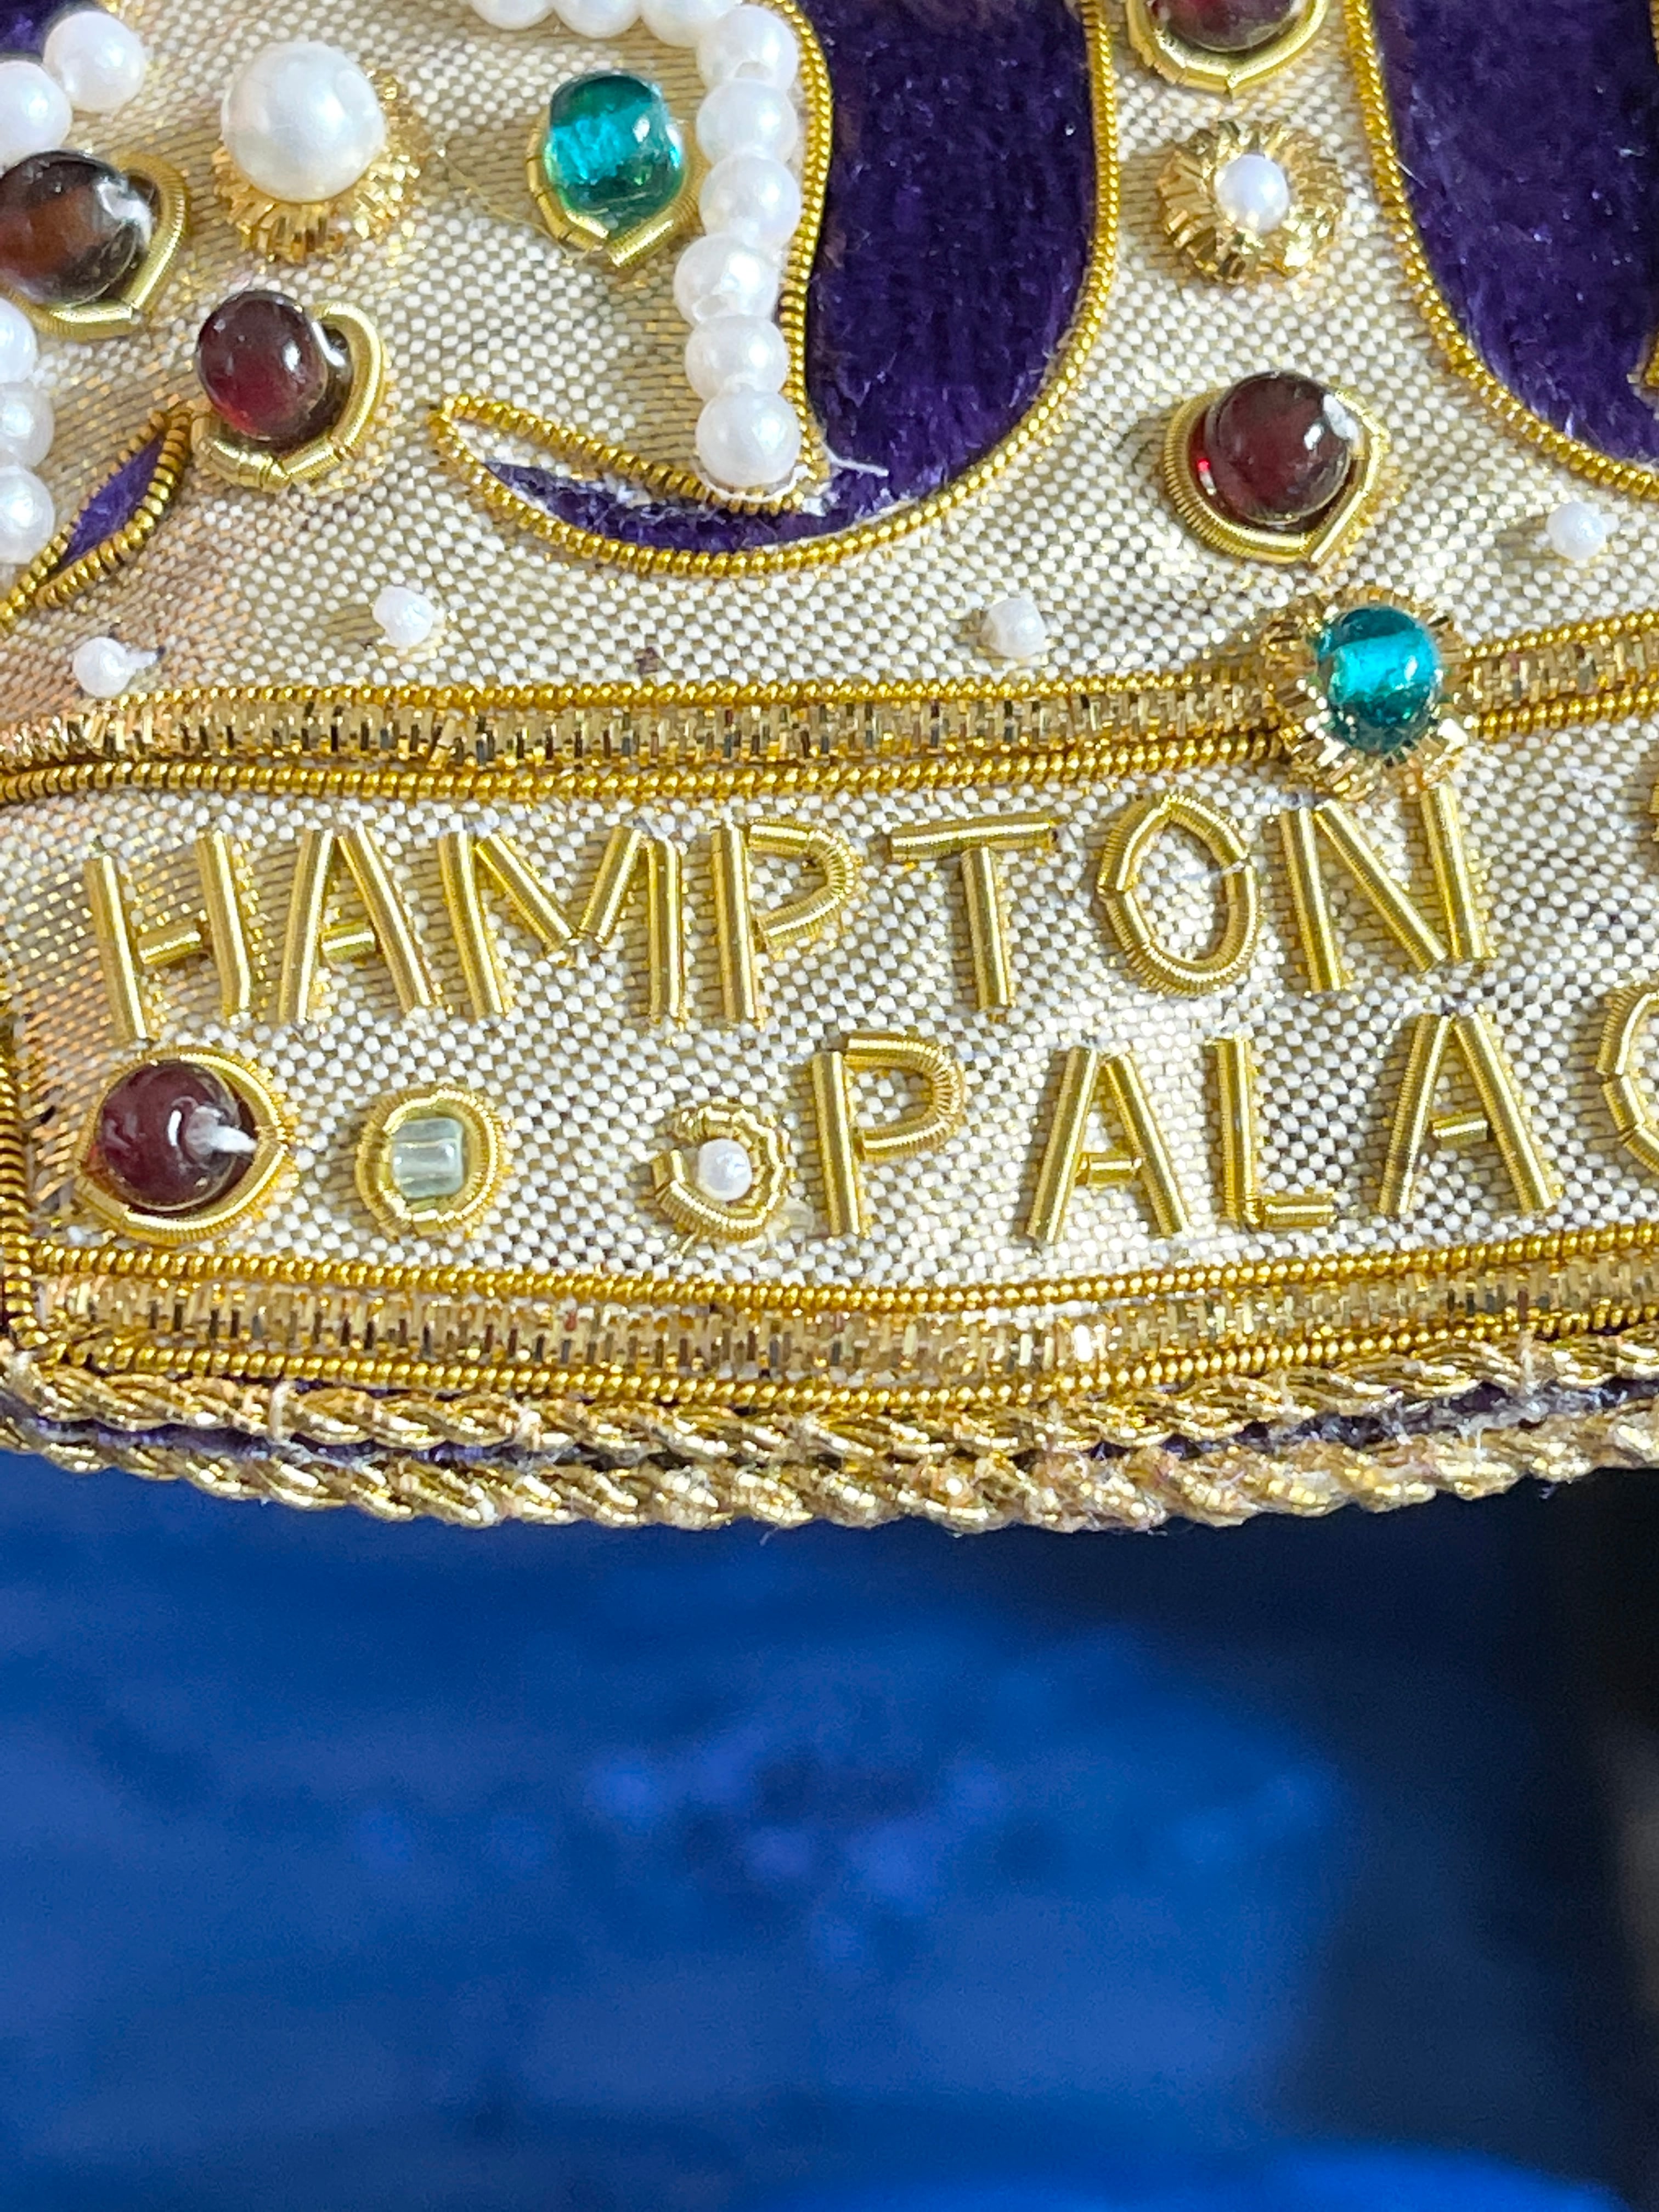 『Royal Palace』ハンプトン コート宮殿の王冠 オーナメント Hampton Court Palace crown decoration